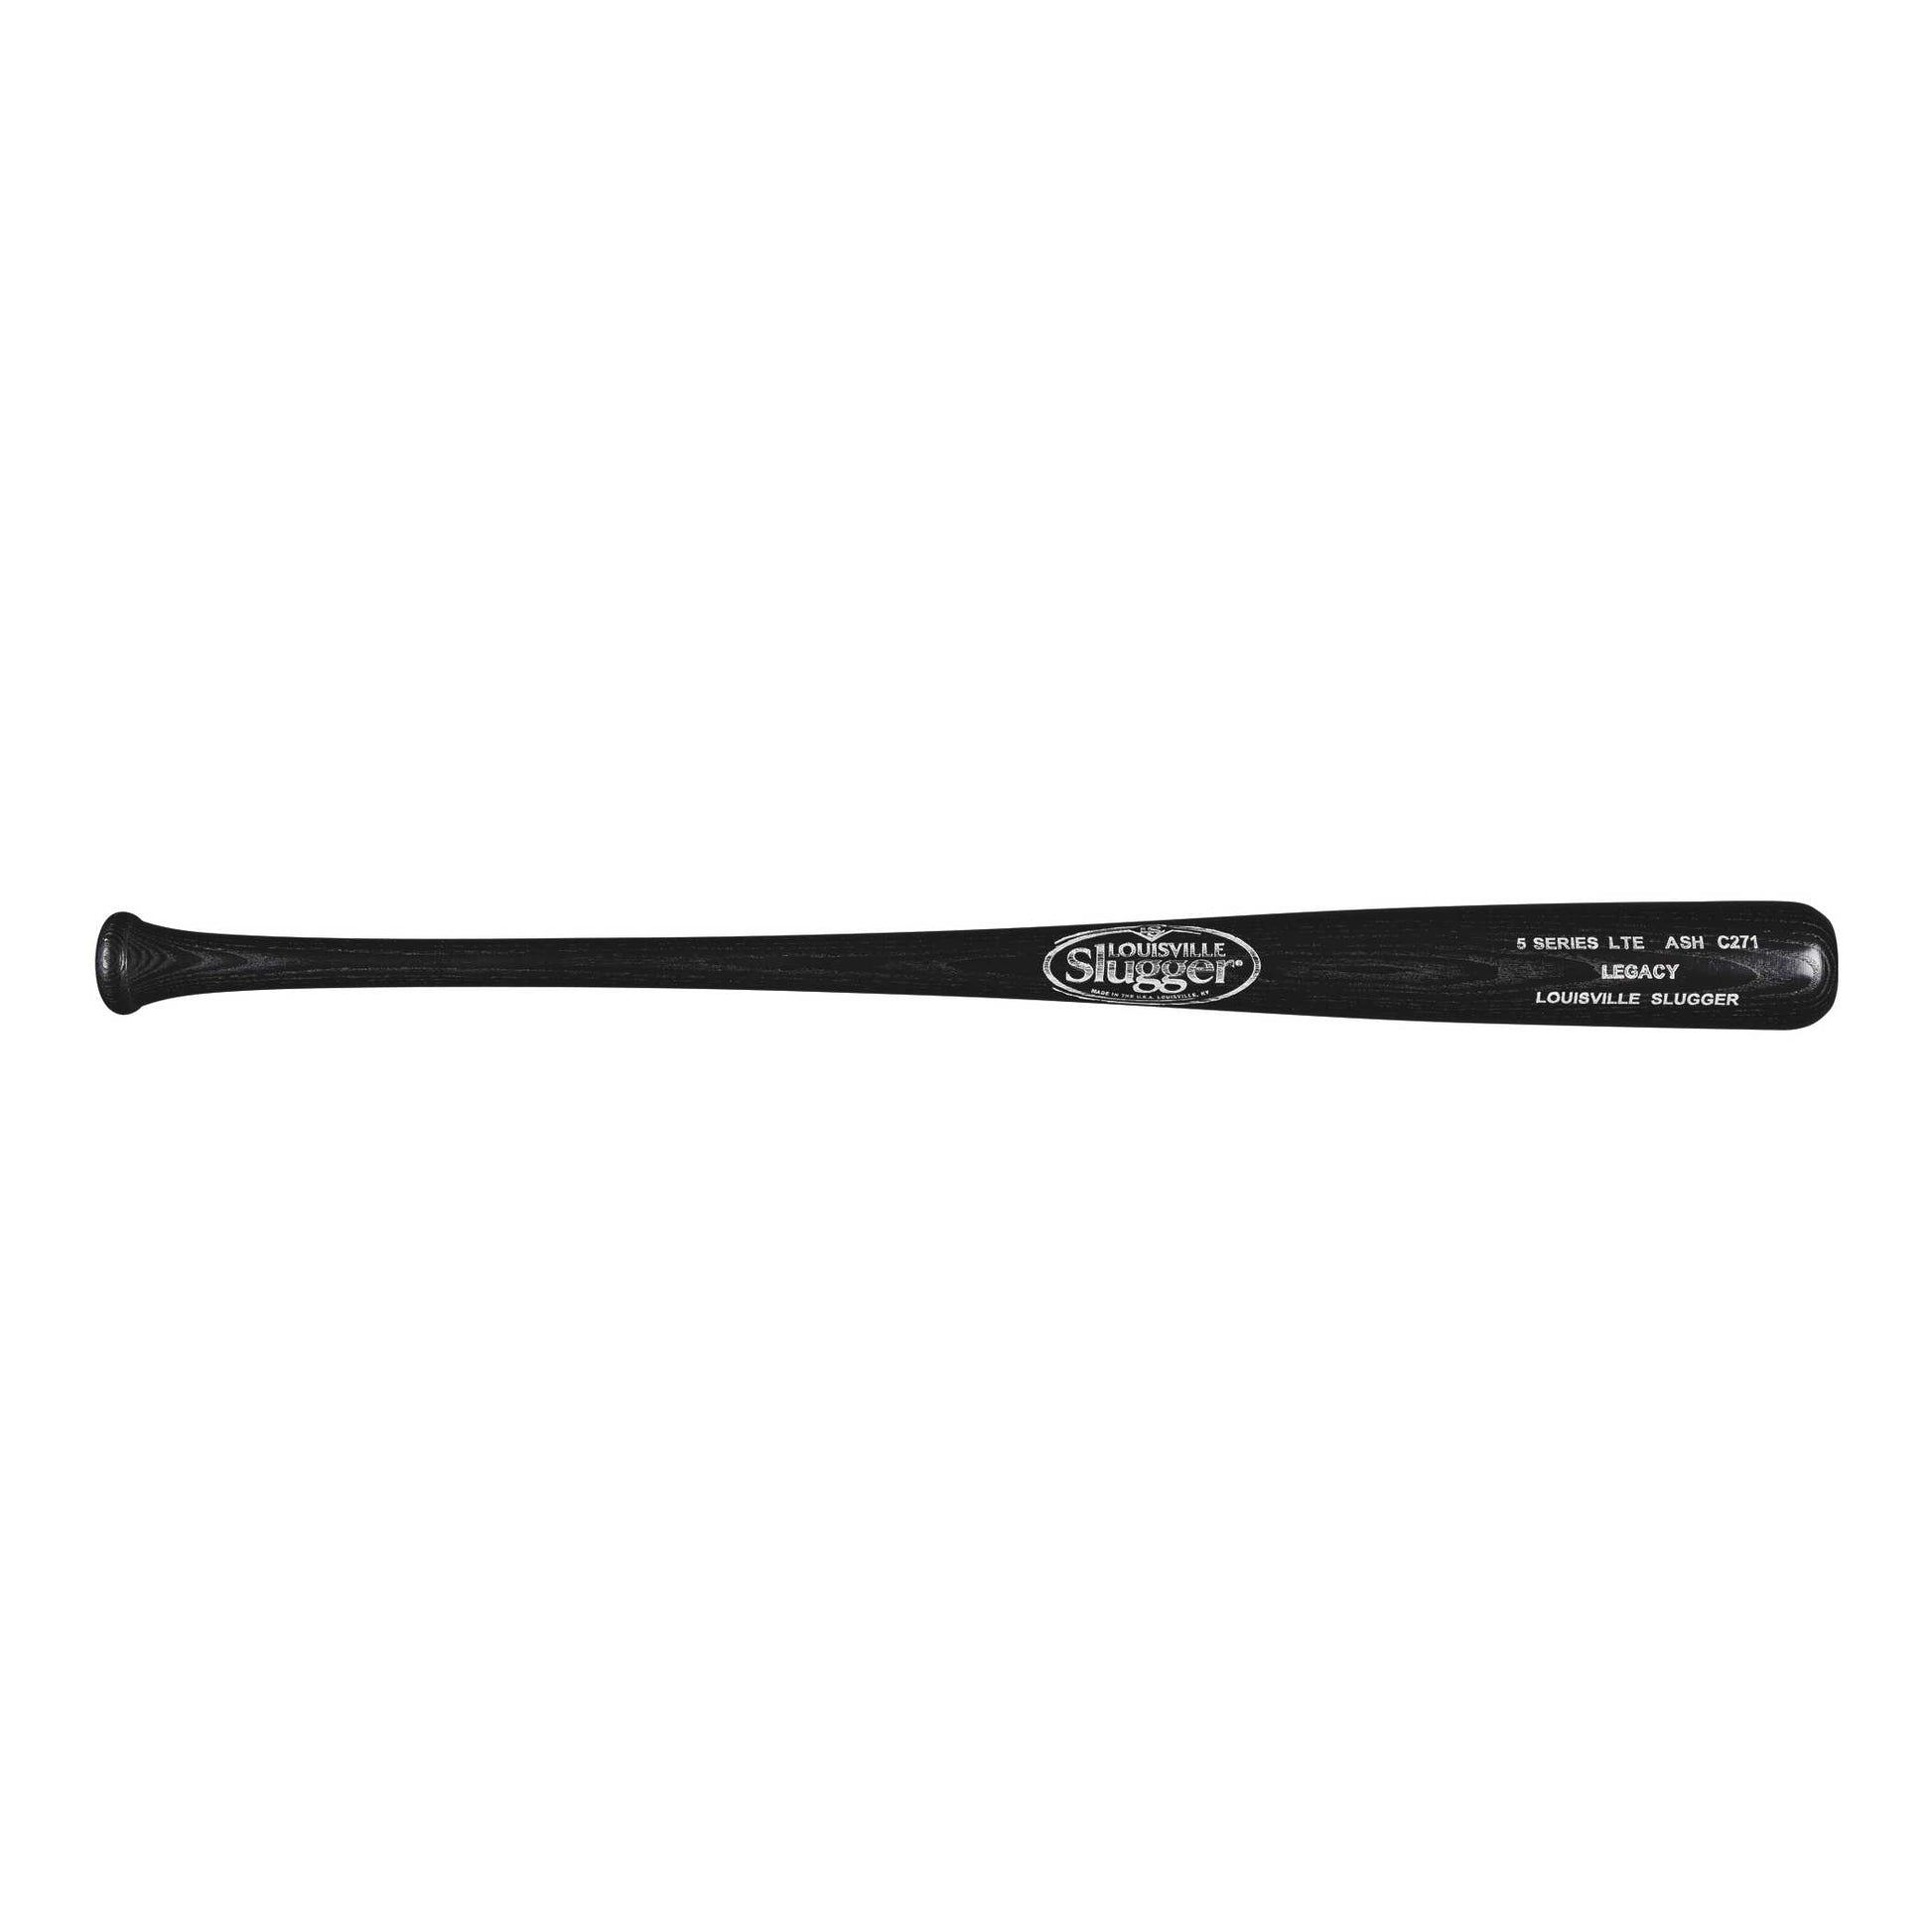 ouisville-slugger-legacy-c271-lte-ash-wtlw5a271c16-baseball-bat